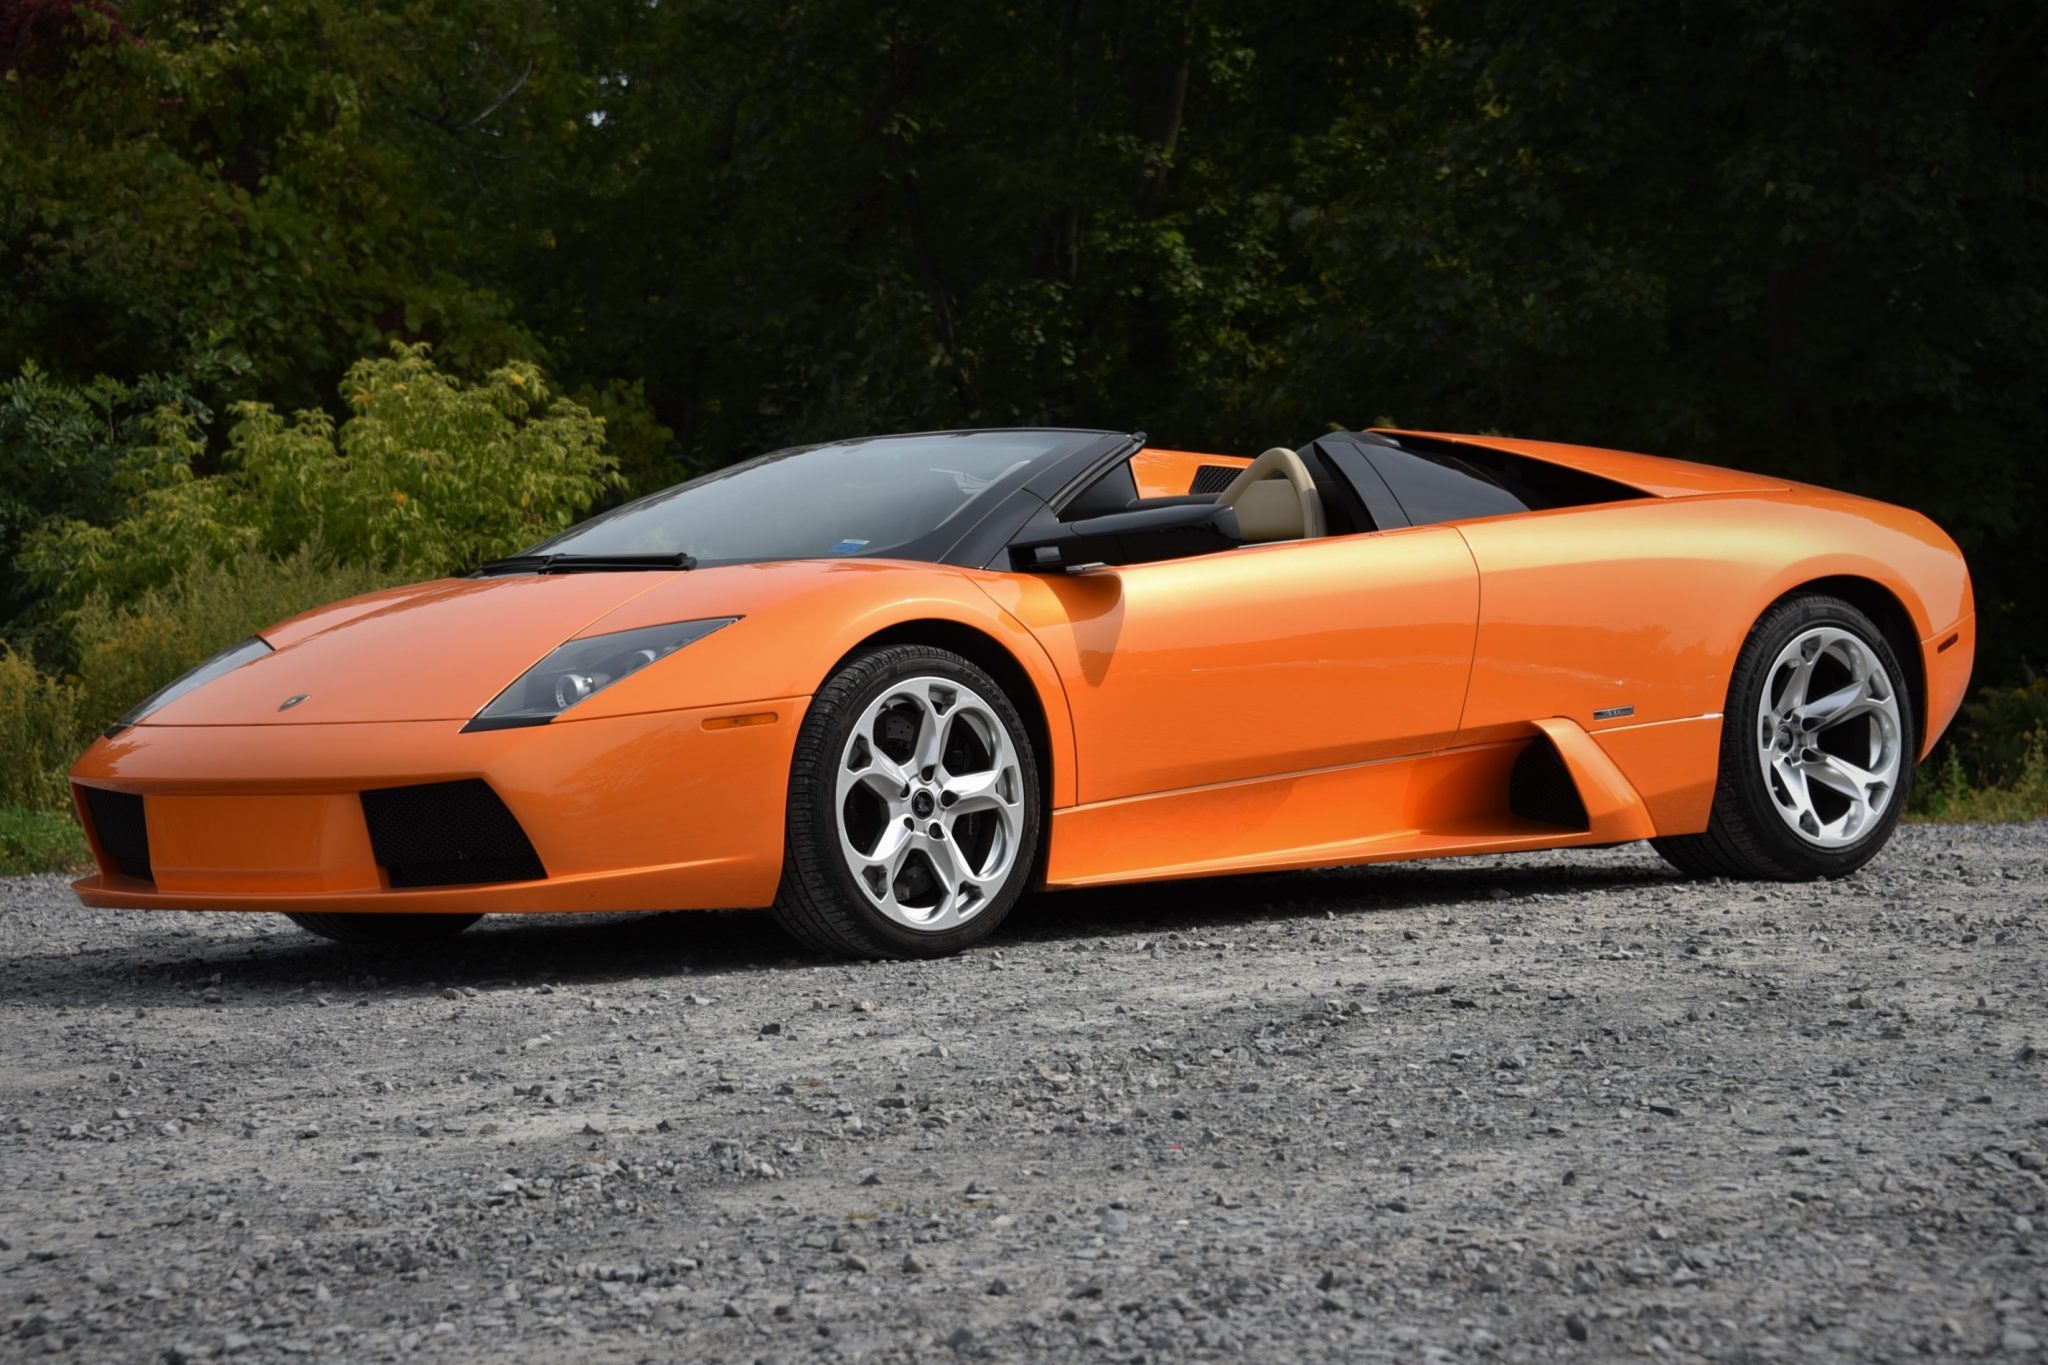 15k-Mile 2006 Lamborghini Murcielago Roadster for sale on BaT Auctions -  sold for $135,000 on November 9, 2020 (Lot #38,892) | Bring a Trailer